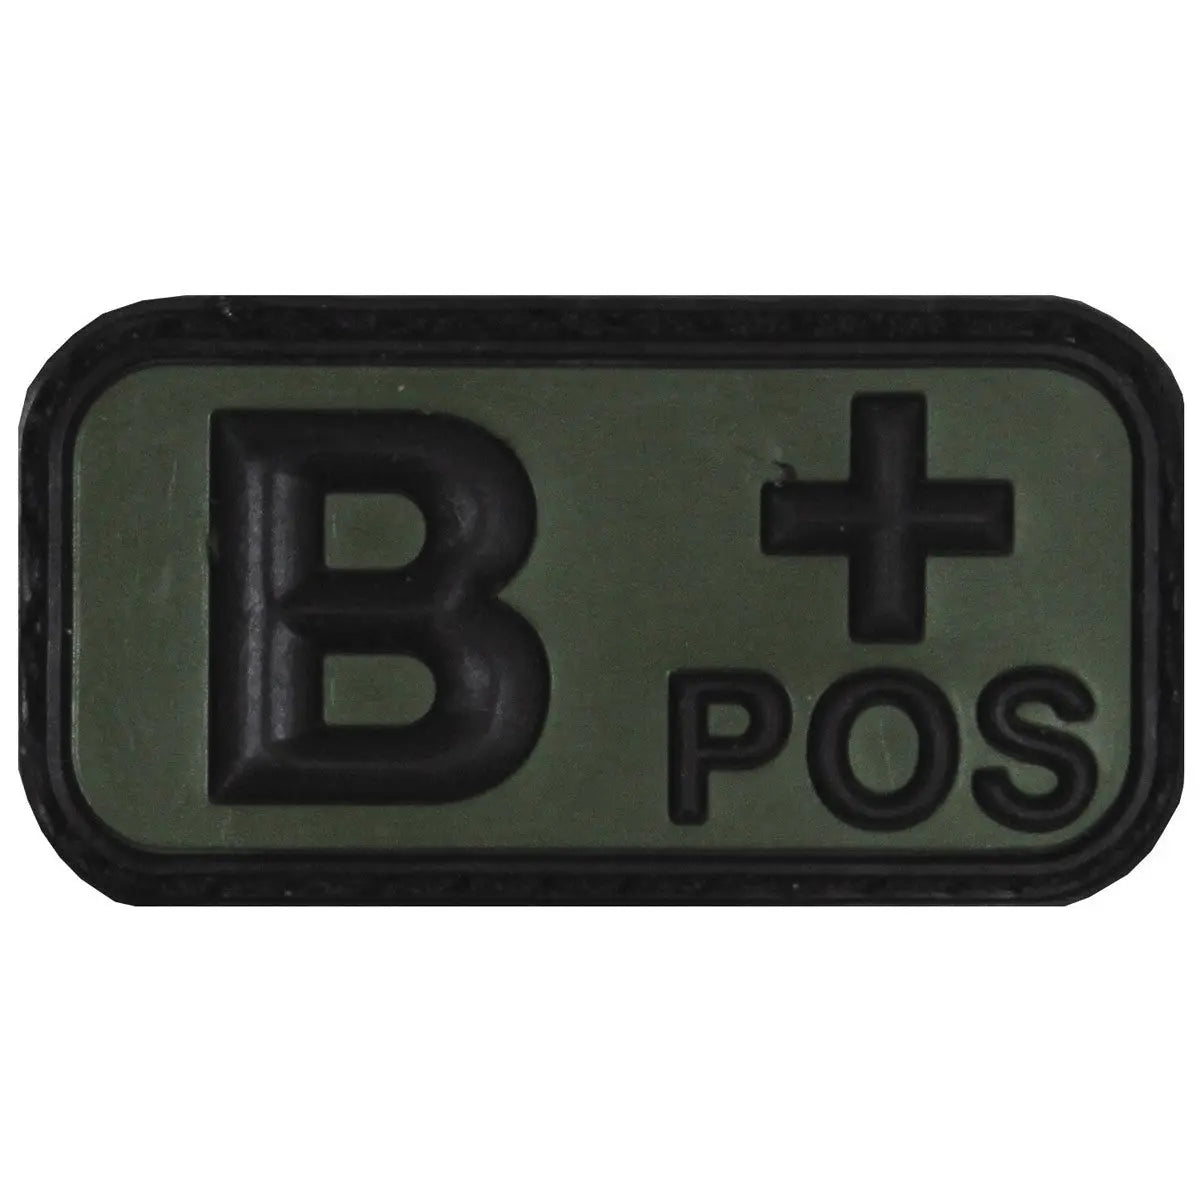 Velcro Patch, black-OD green, blood group "B POS", 3D